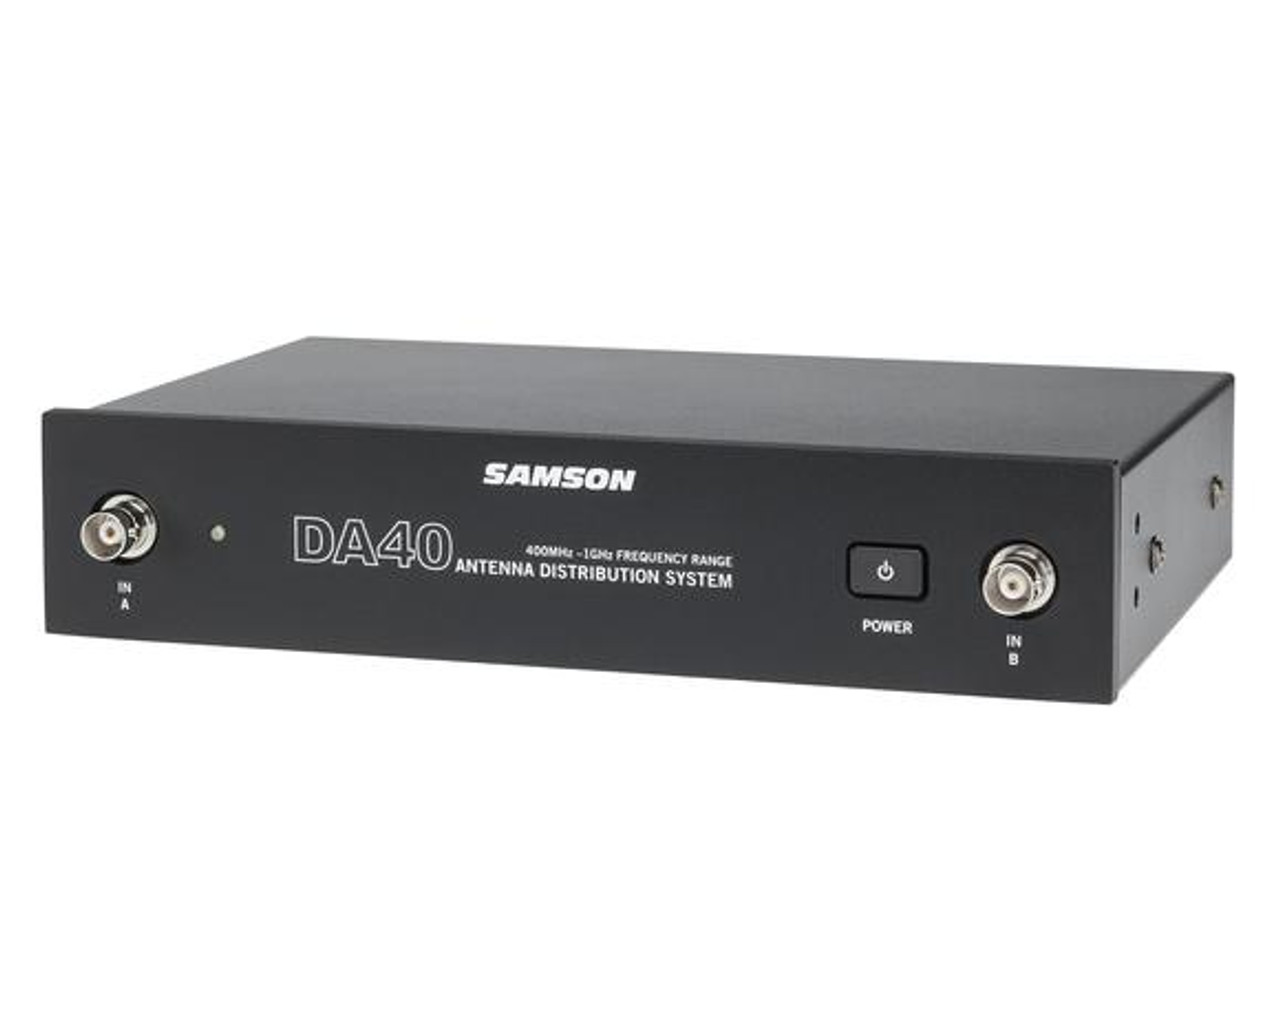 Samson SWDA40 Antenna Distribution System